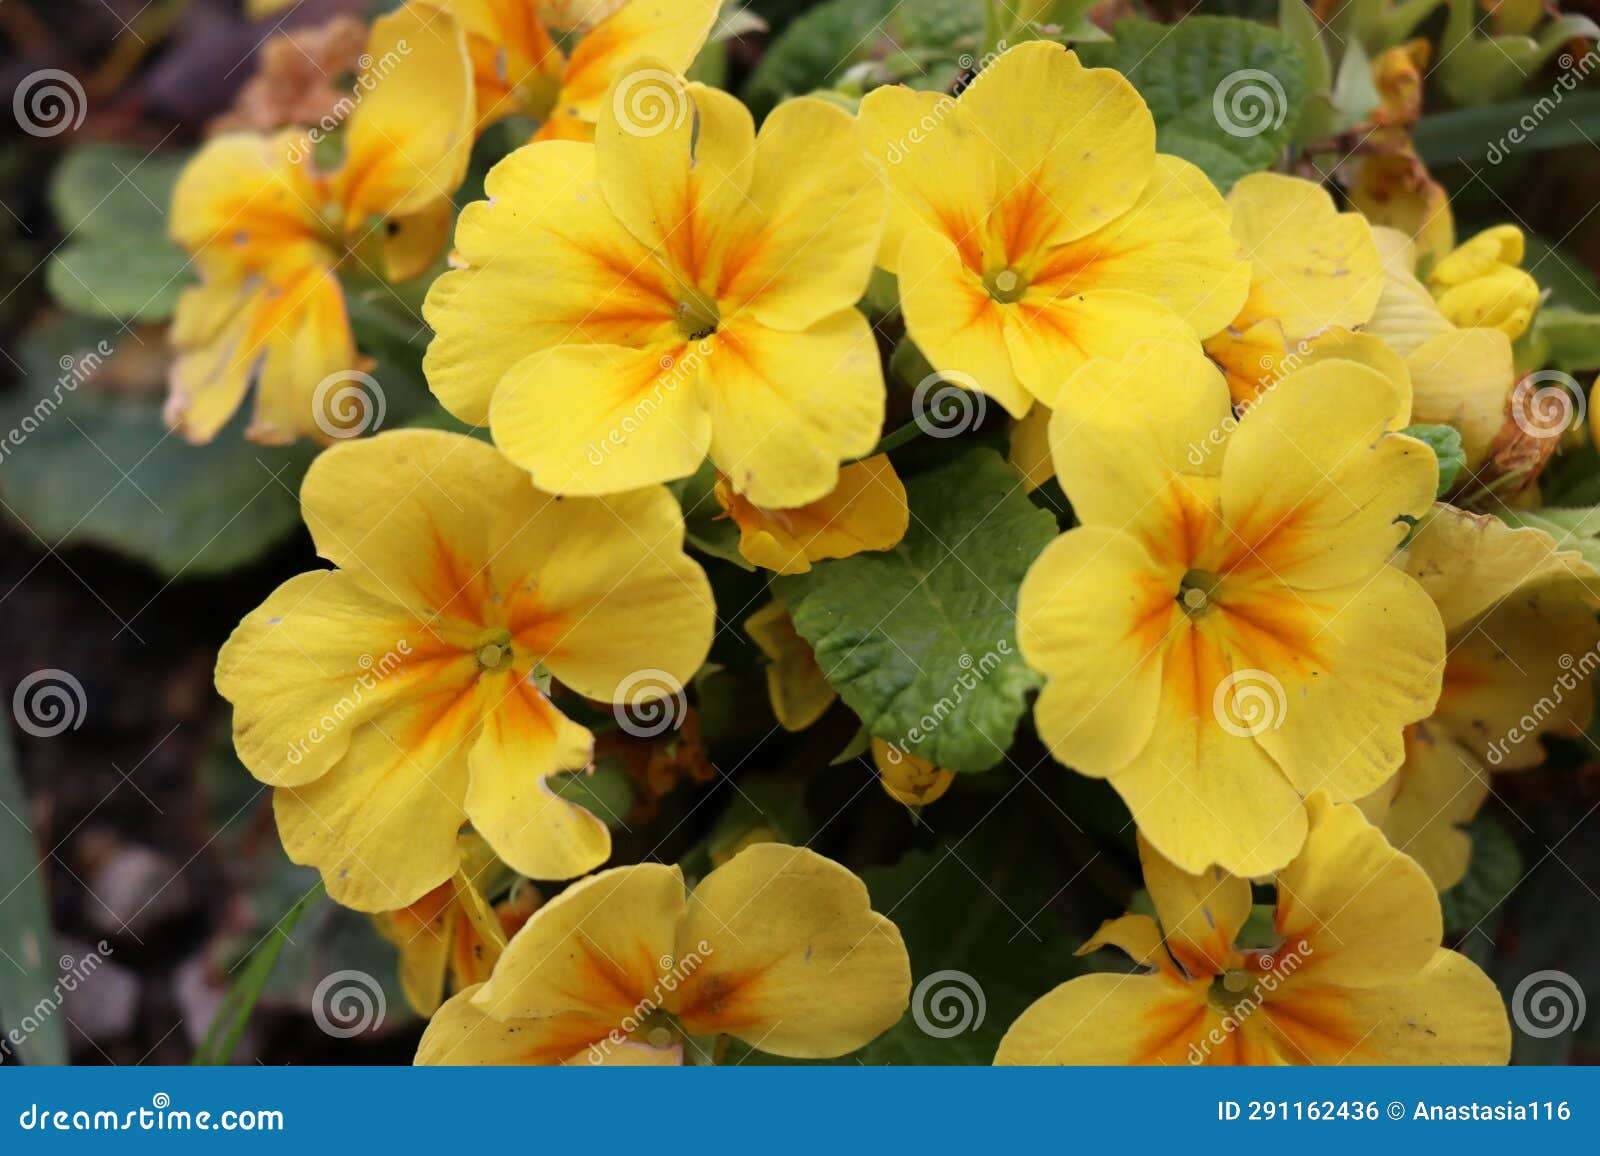 primula yellow large- flowered primrose, cabaret cream flower ambie